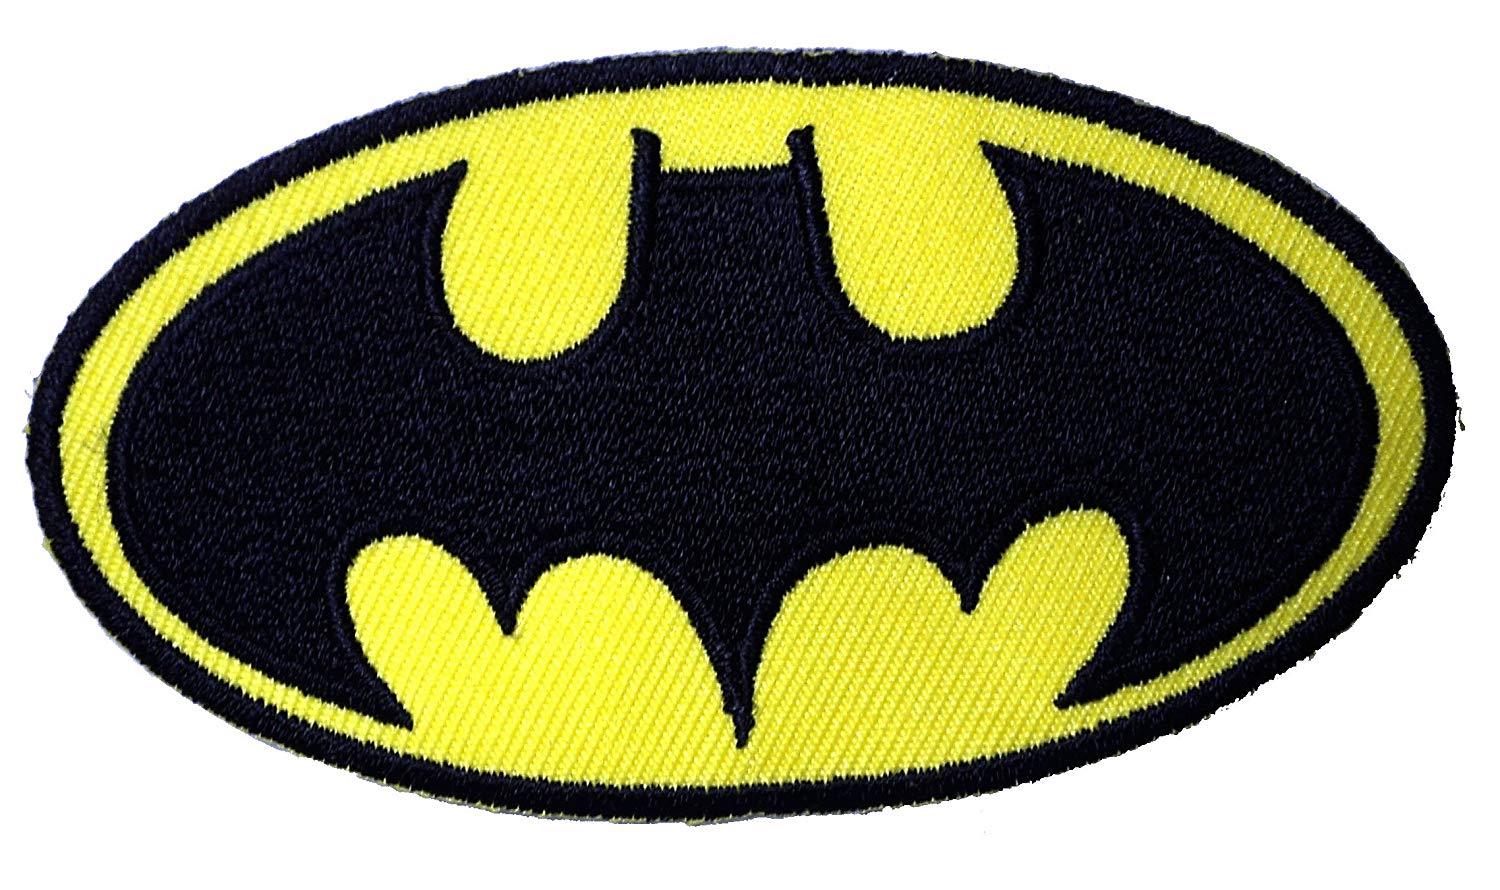 El Bat Logo - Amazon.com: 1 X Batman Logo ~ Embroidered Iron On / Sew On Patch ...